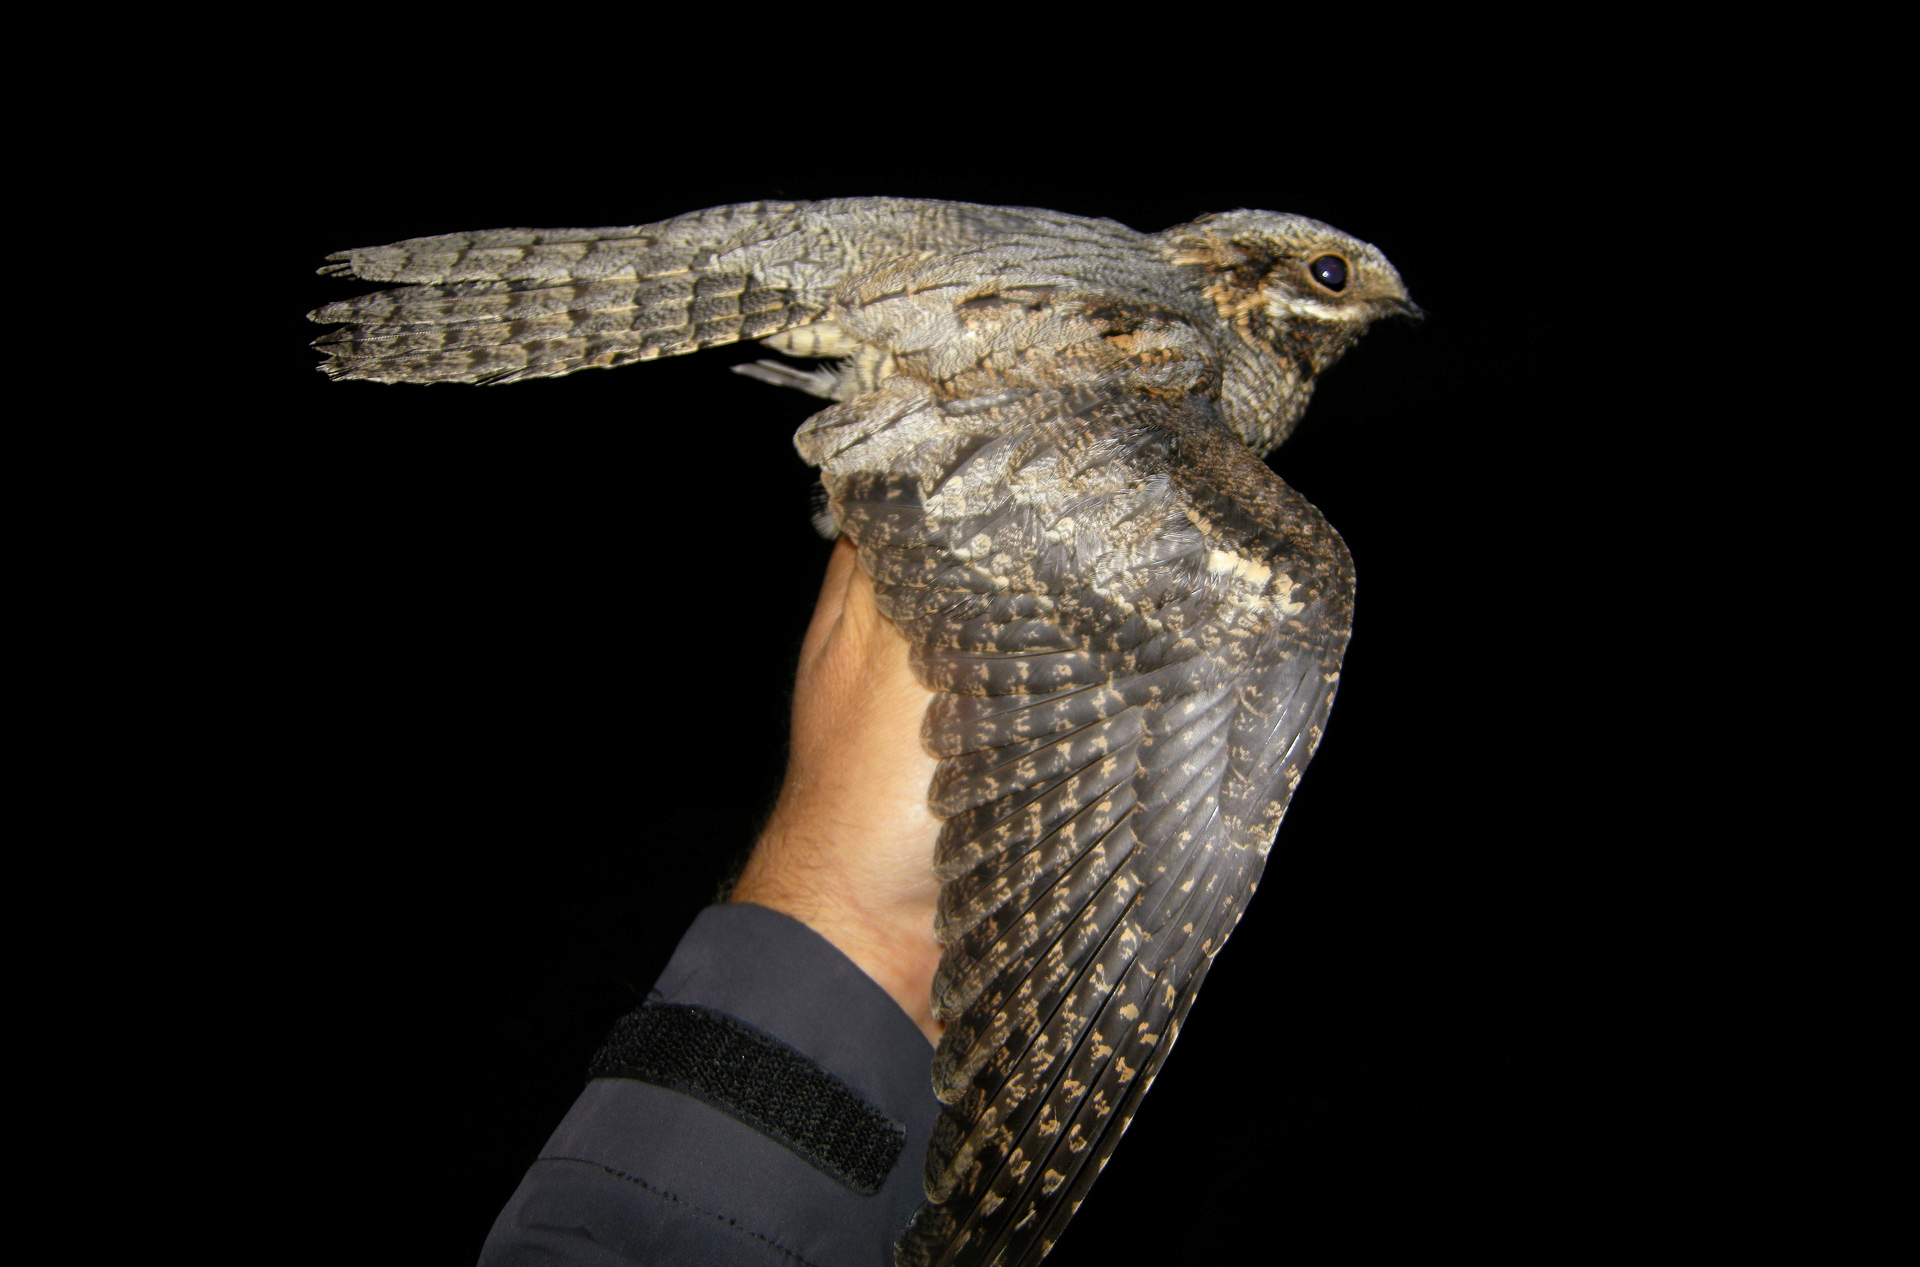 nightjar bird resting on persons hand at nightime